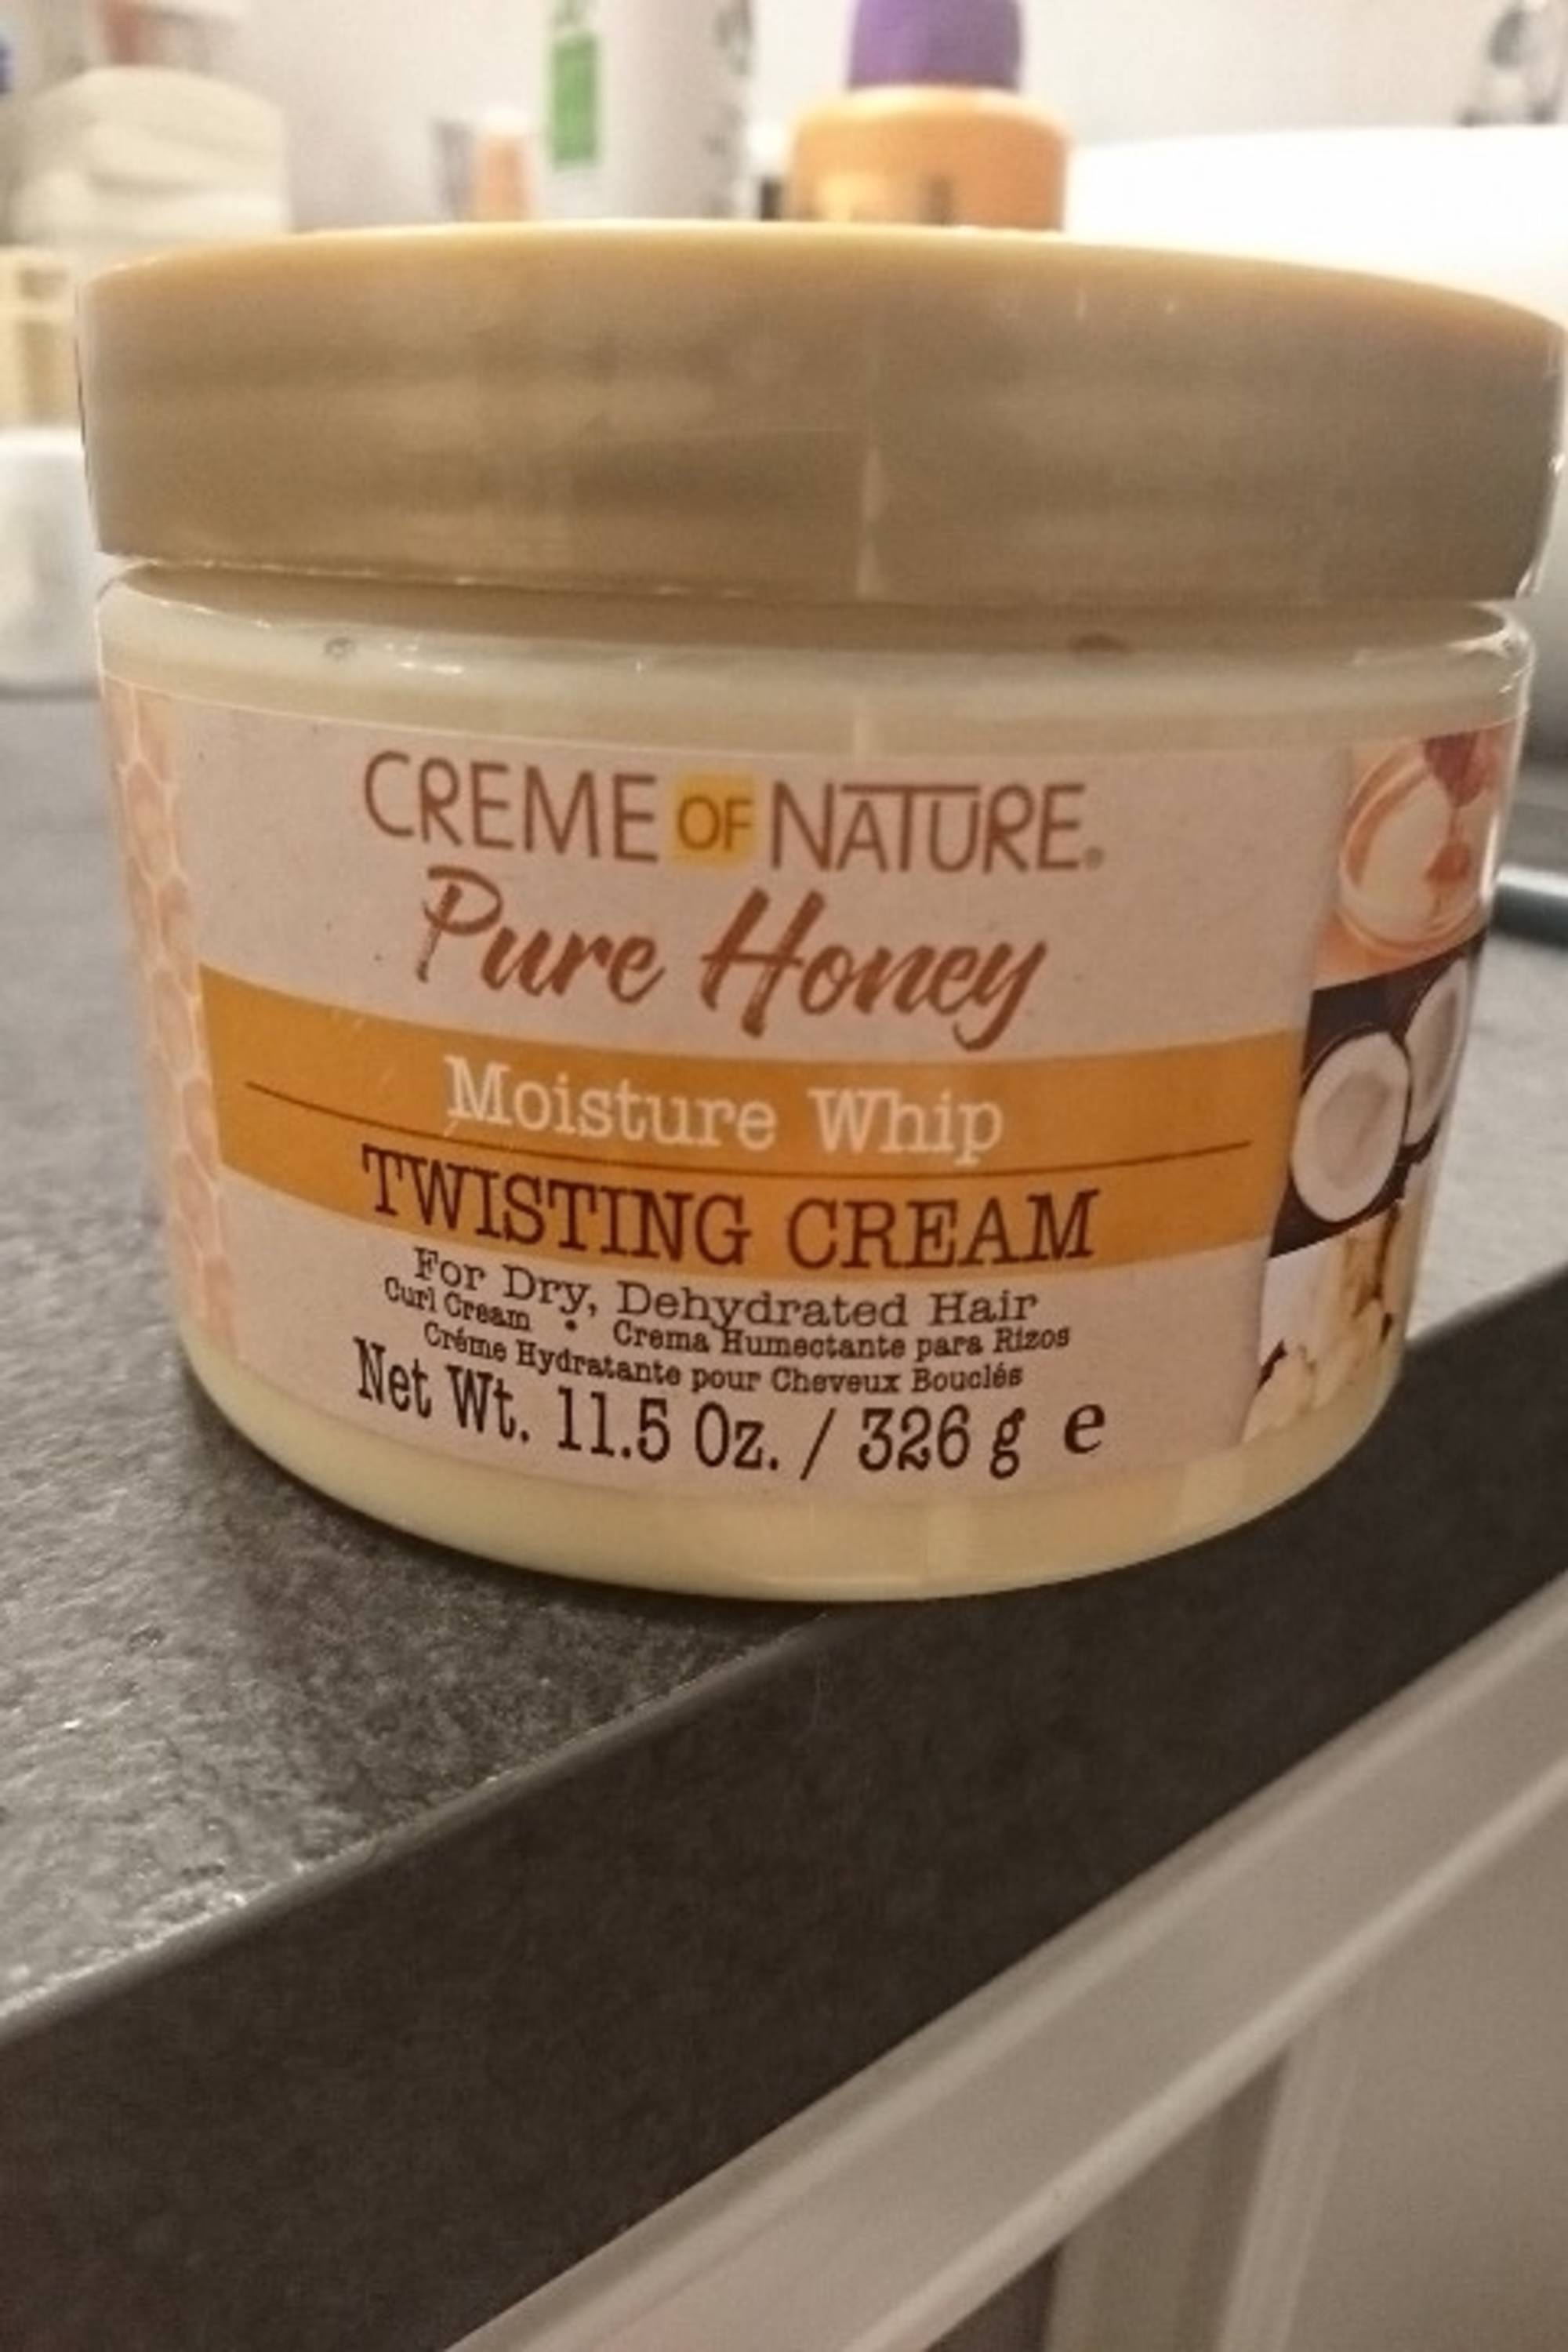 CREME OF NATURE - Pure honey - Moisture whip twisting cream